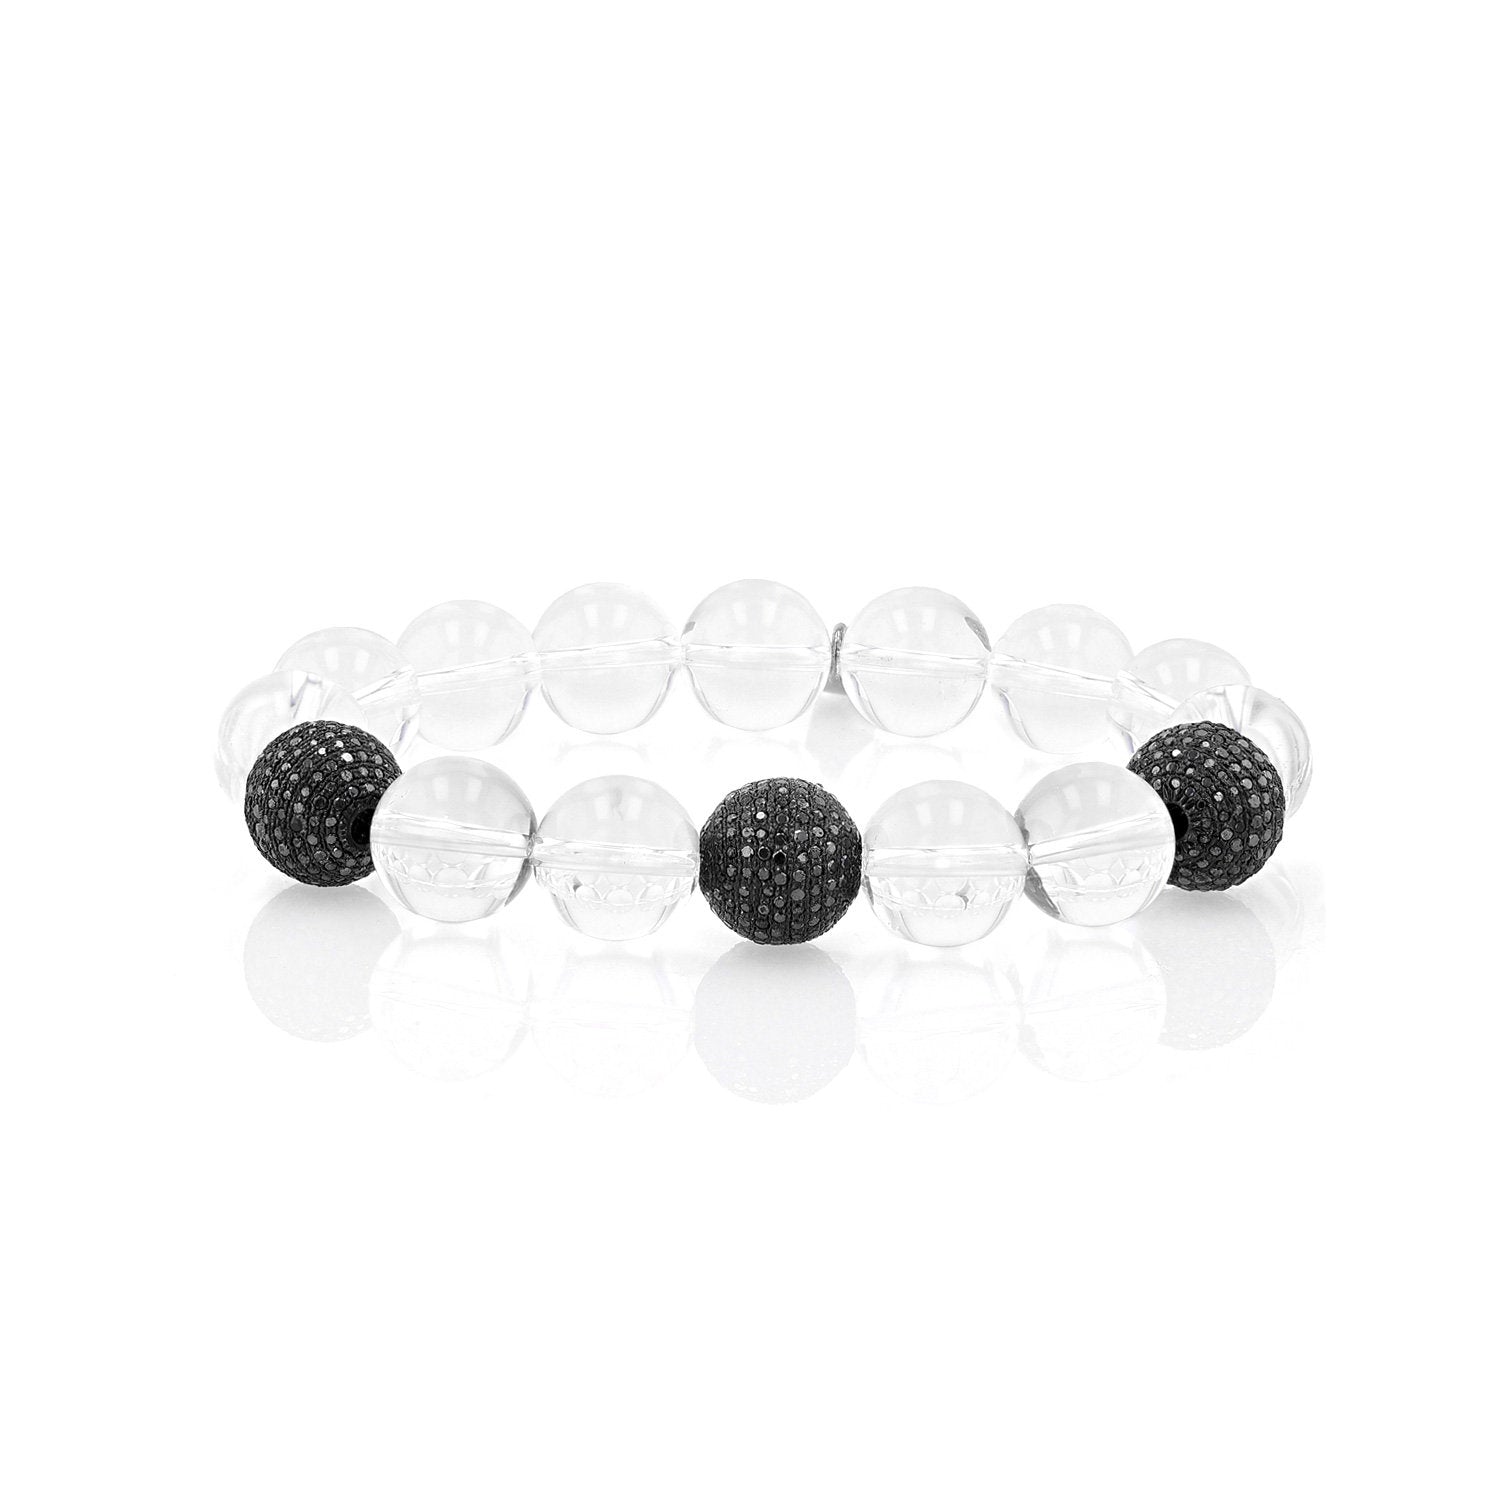 Crystal Quartz Bracelet with 3 Pave Black Diamond Balls - 12mm  B0003661 - TBird